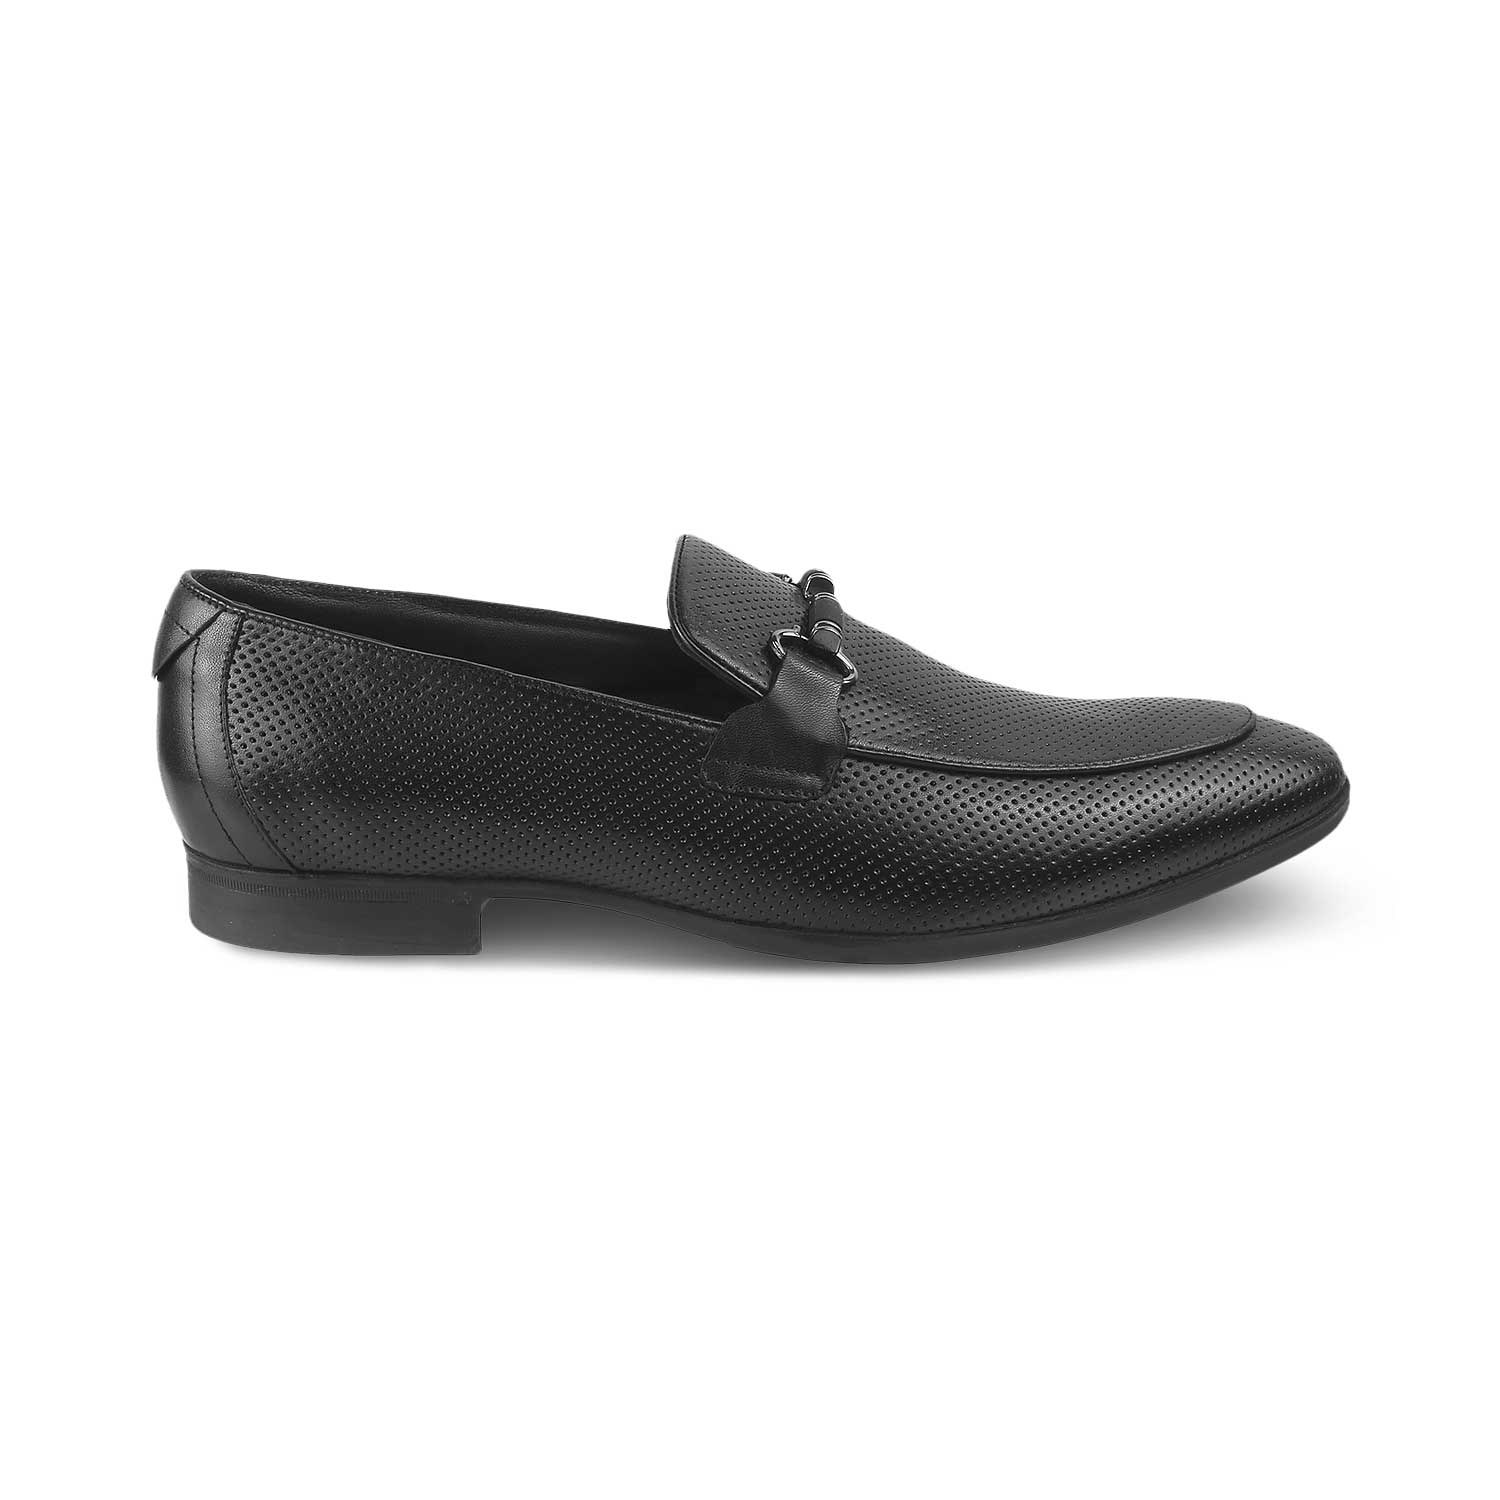 The Roshbuck Black Leather Loafers for Men Online at Tresmode.com